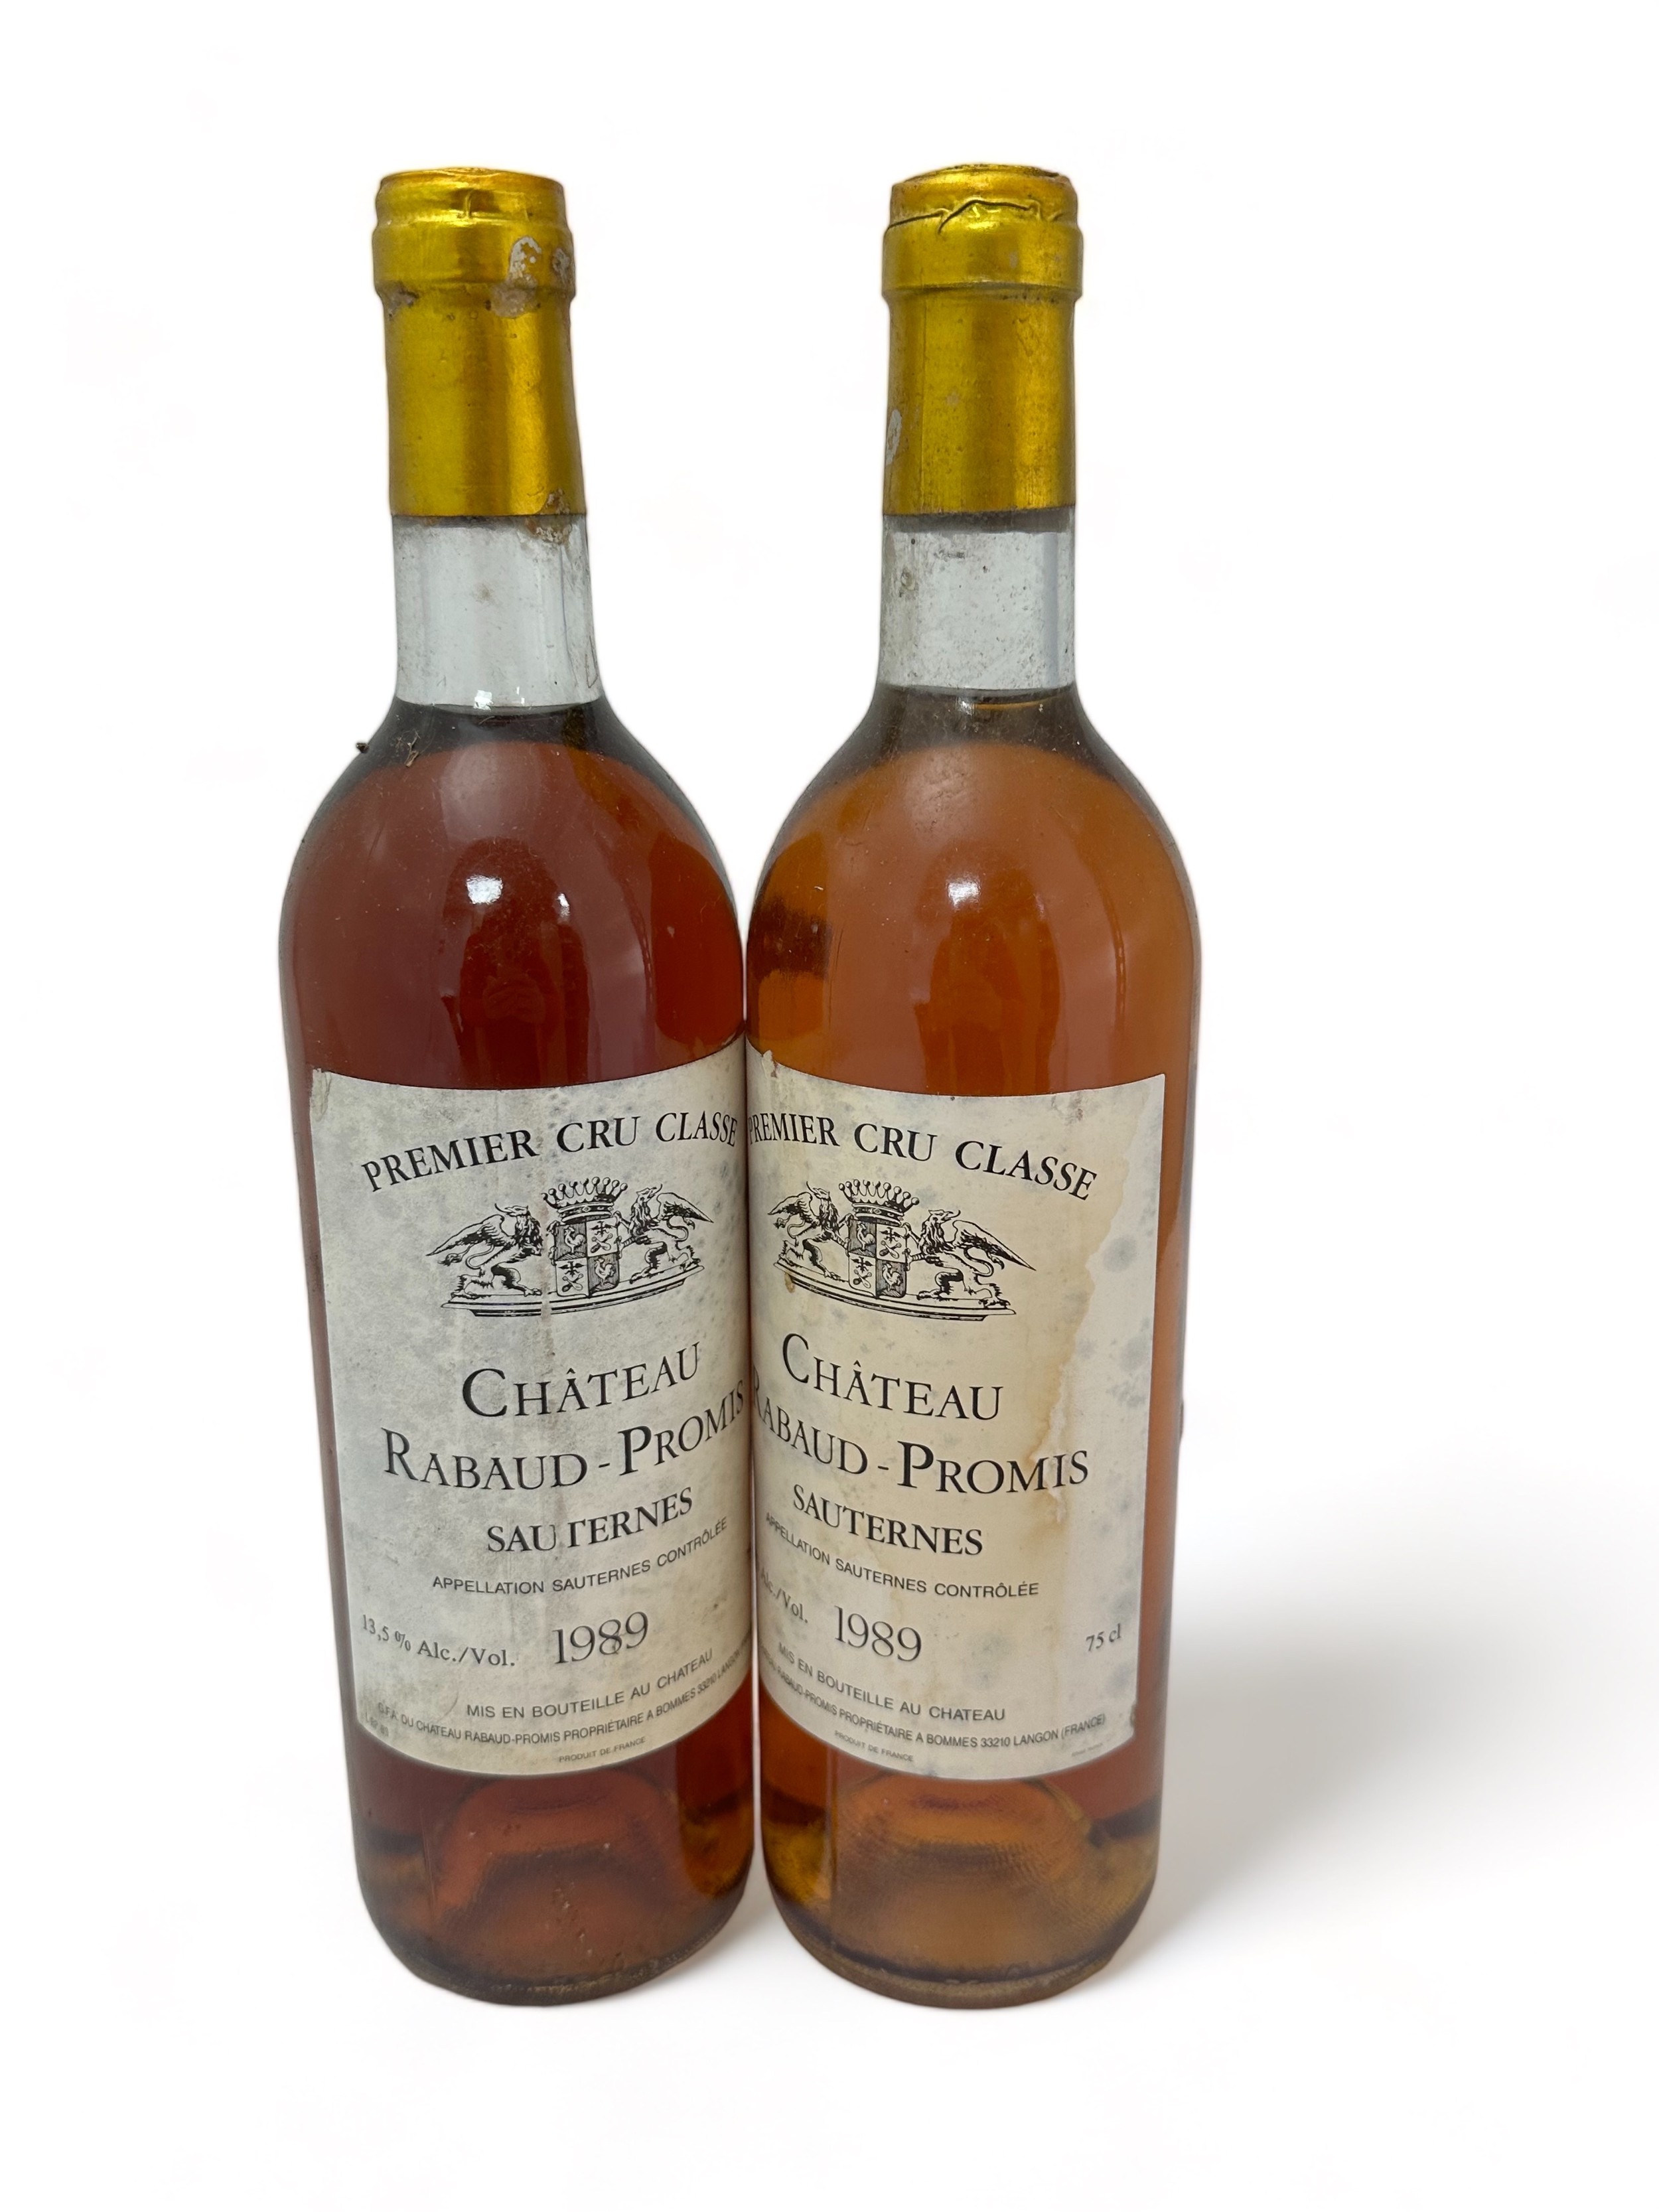 Two bottles of dessert wine Chateau Rabaud-Promis Sauternes 1989, Premier Cru Classé. Some damage to